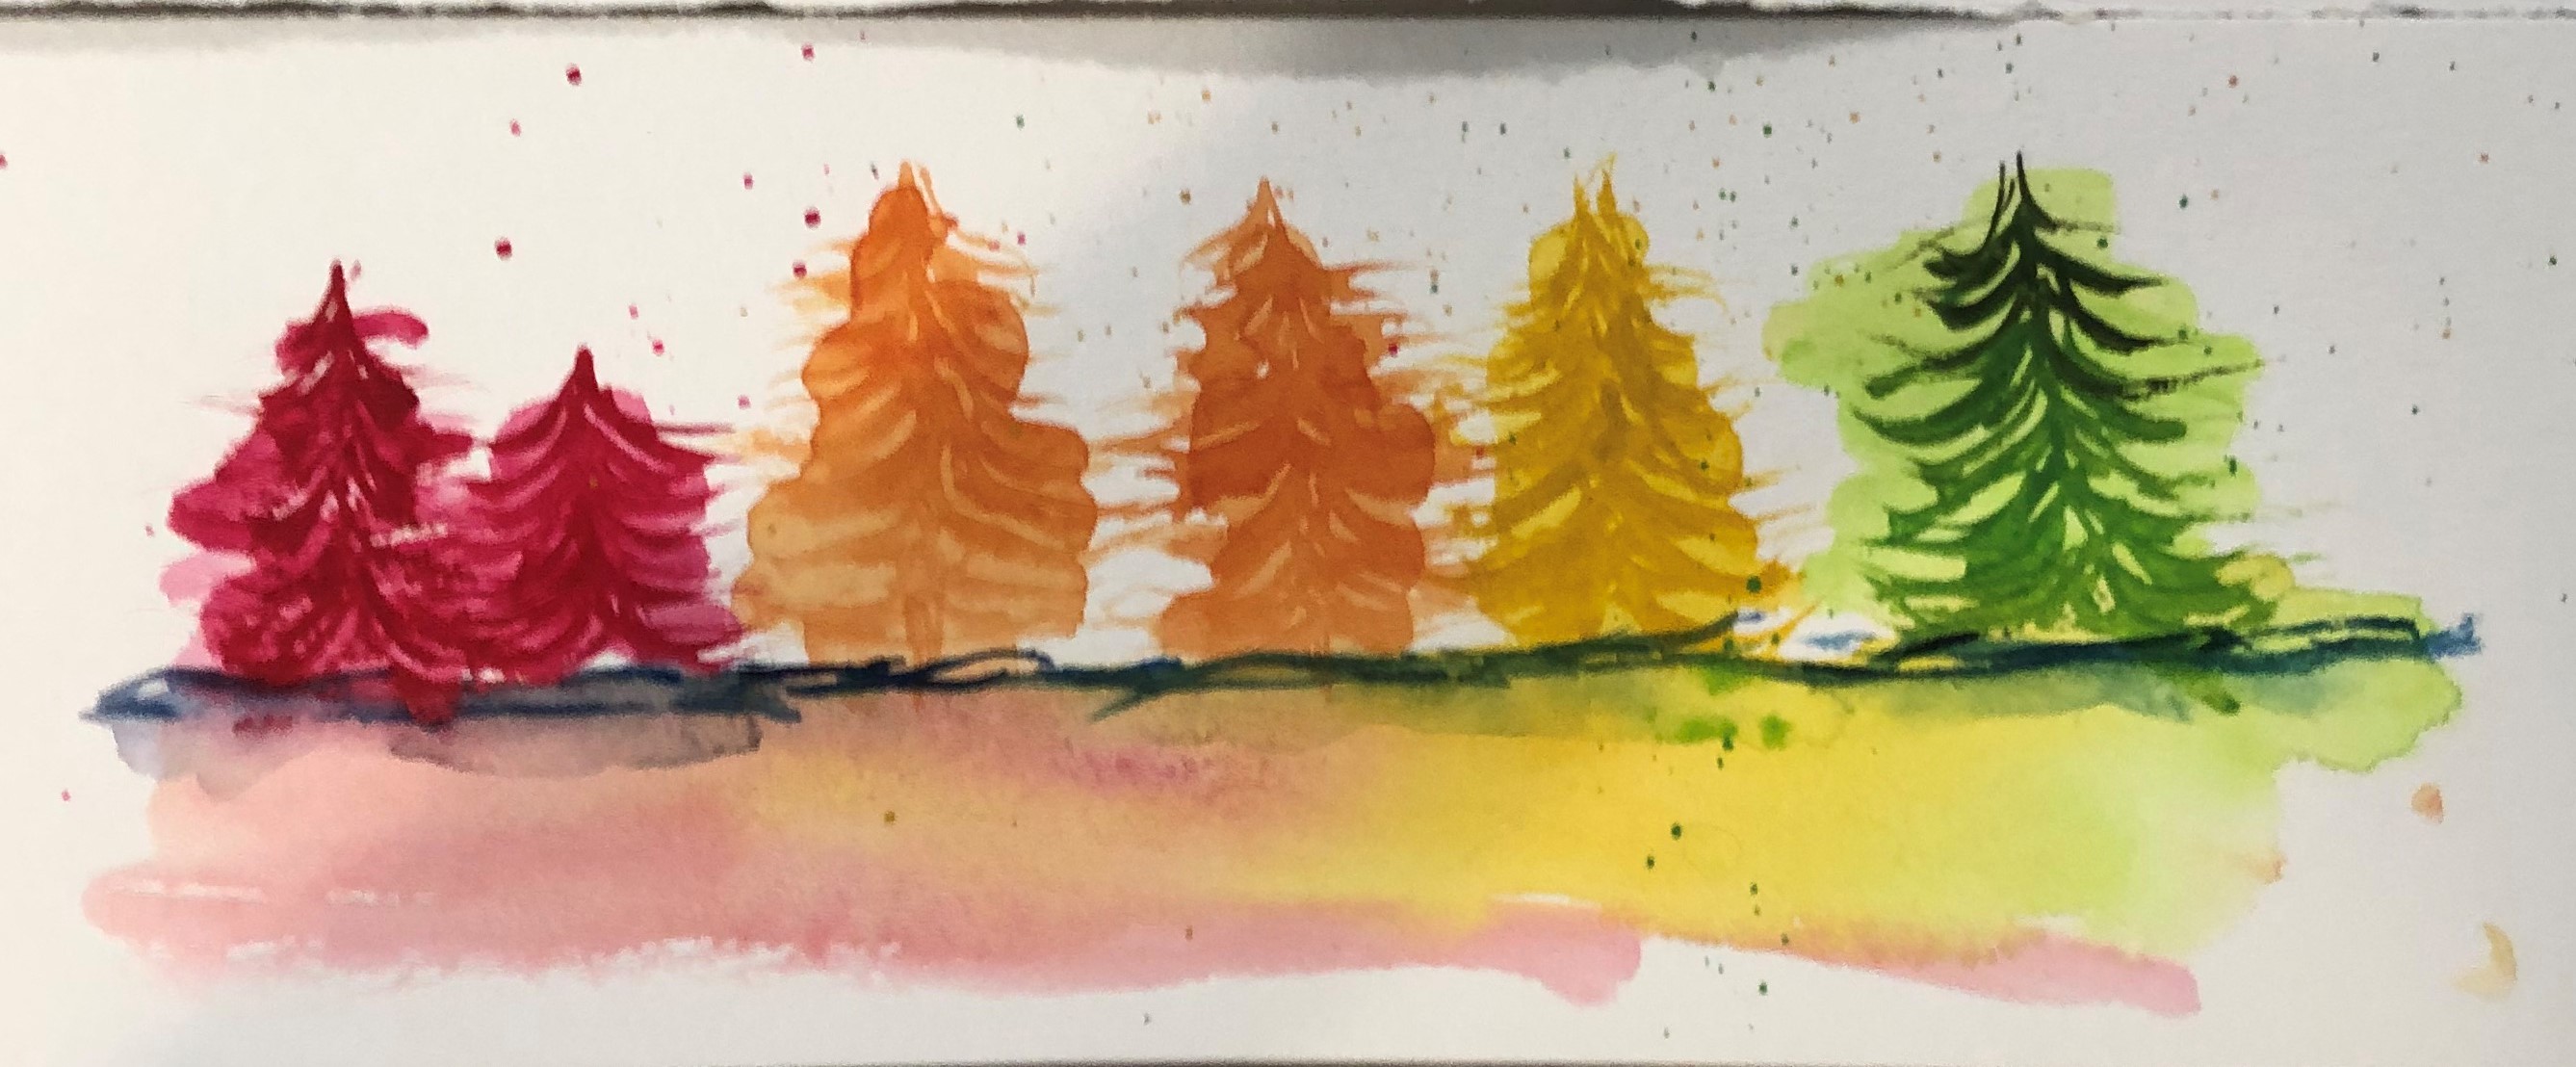 Watercolor trees